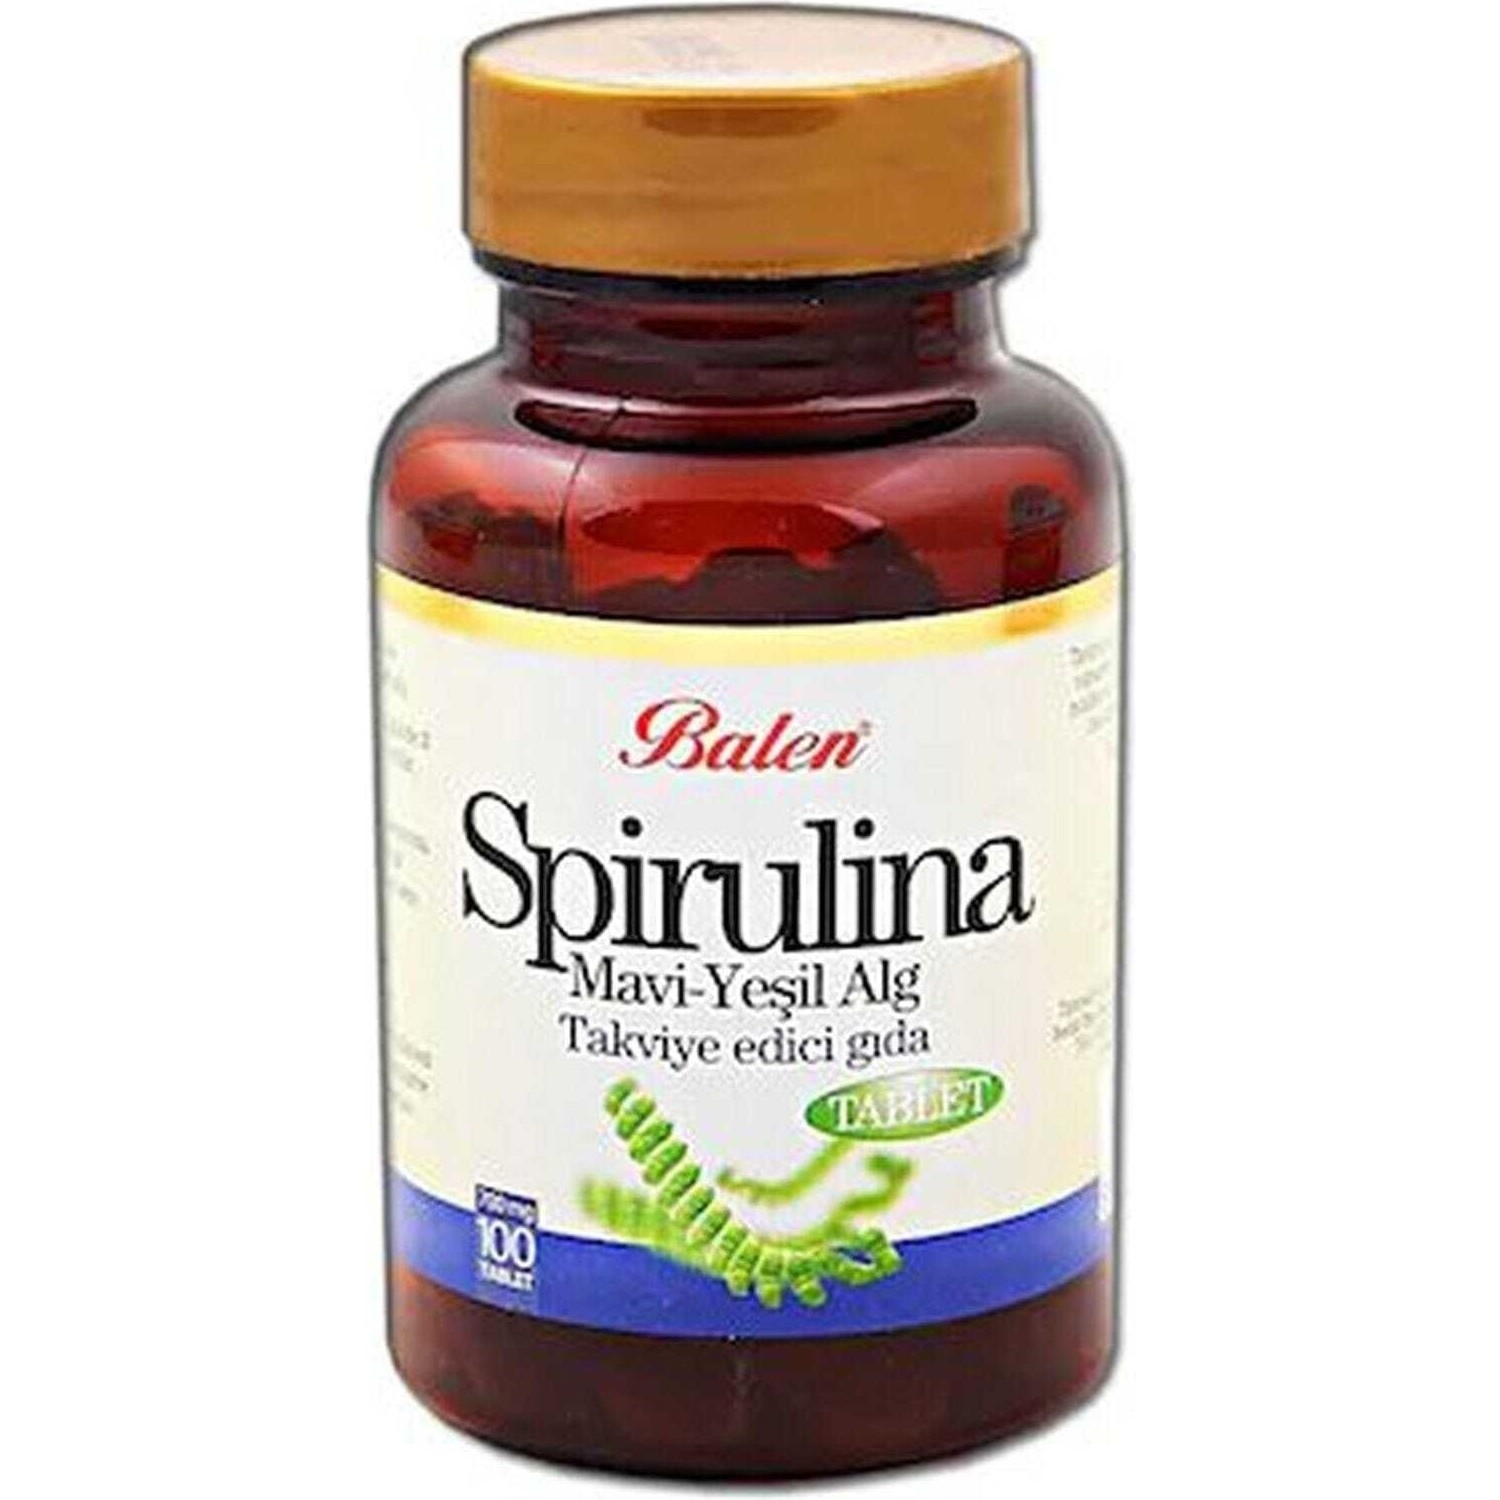 цена Пищевая добавка Balen Spirulina 700 мг, 100 таблеток